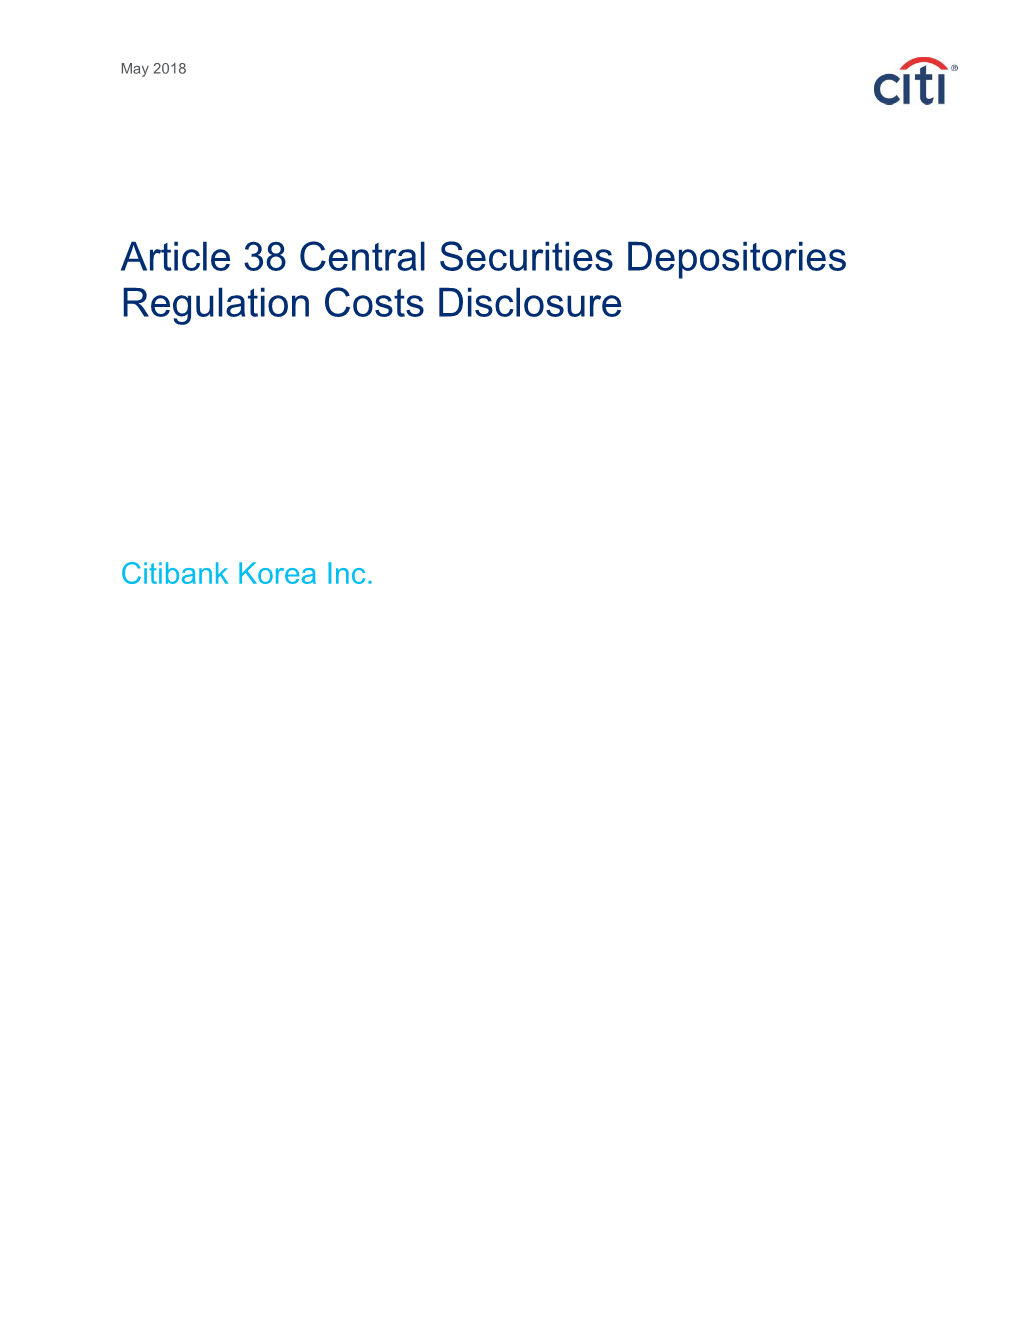 CSDR Costs Disclosure